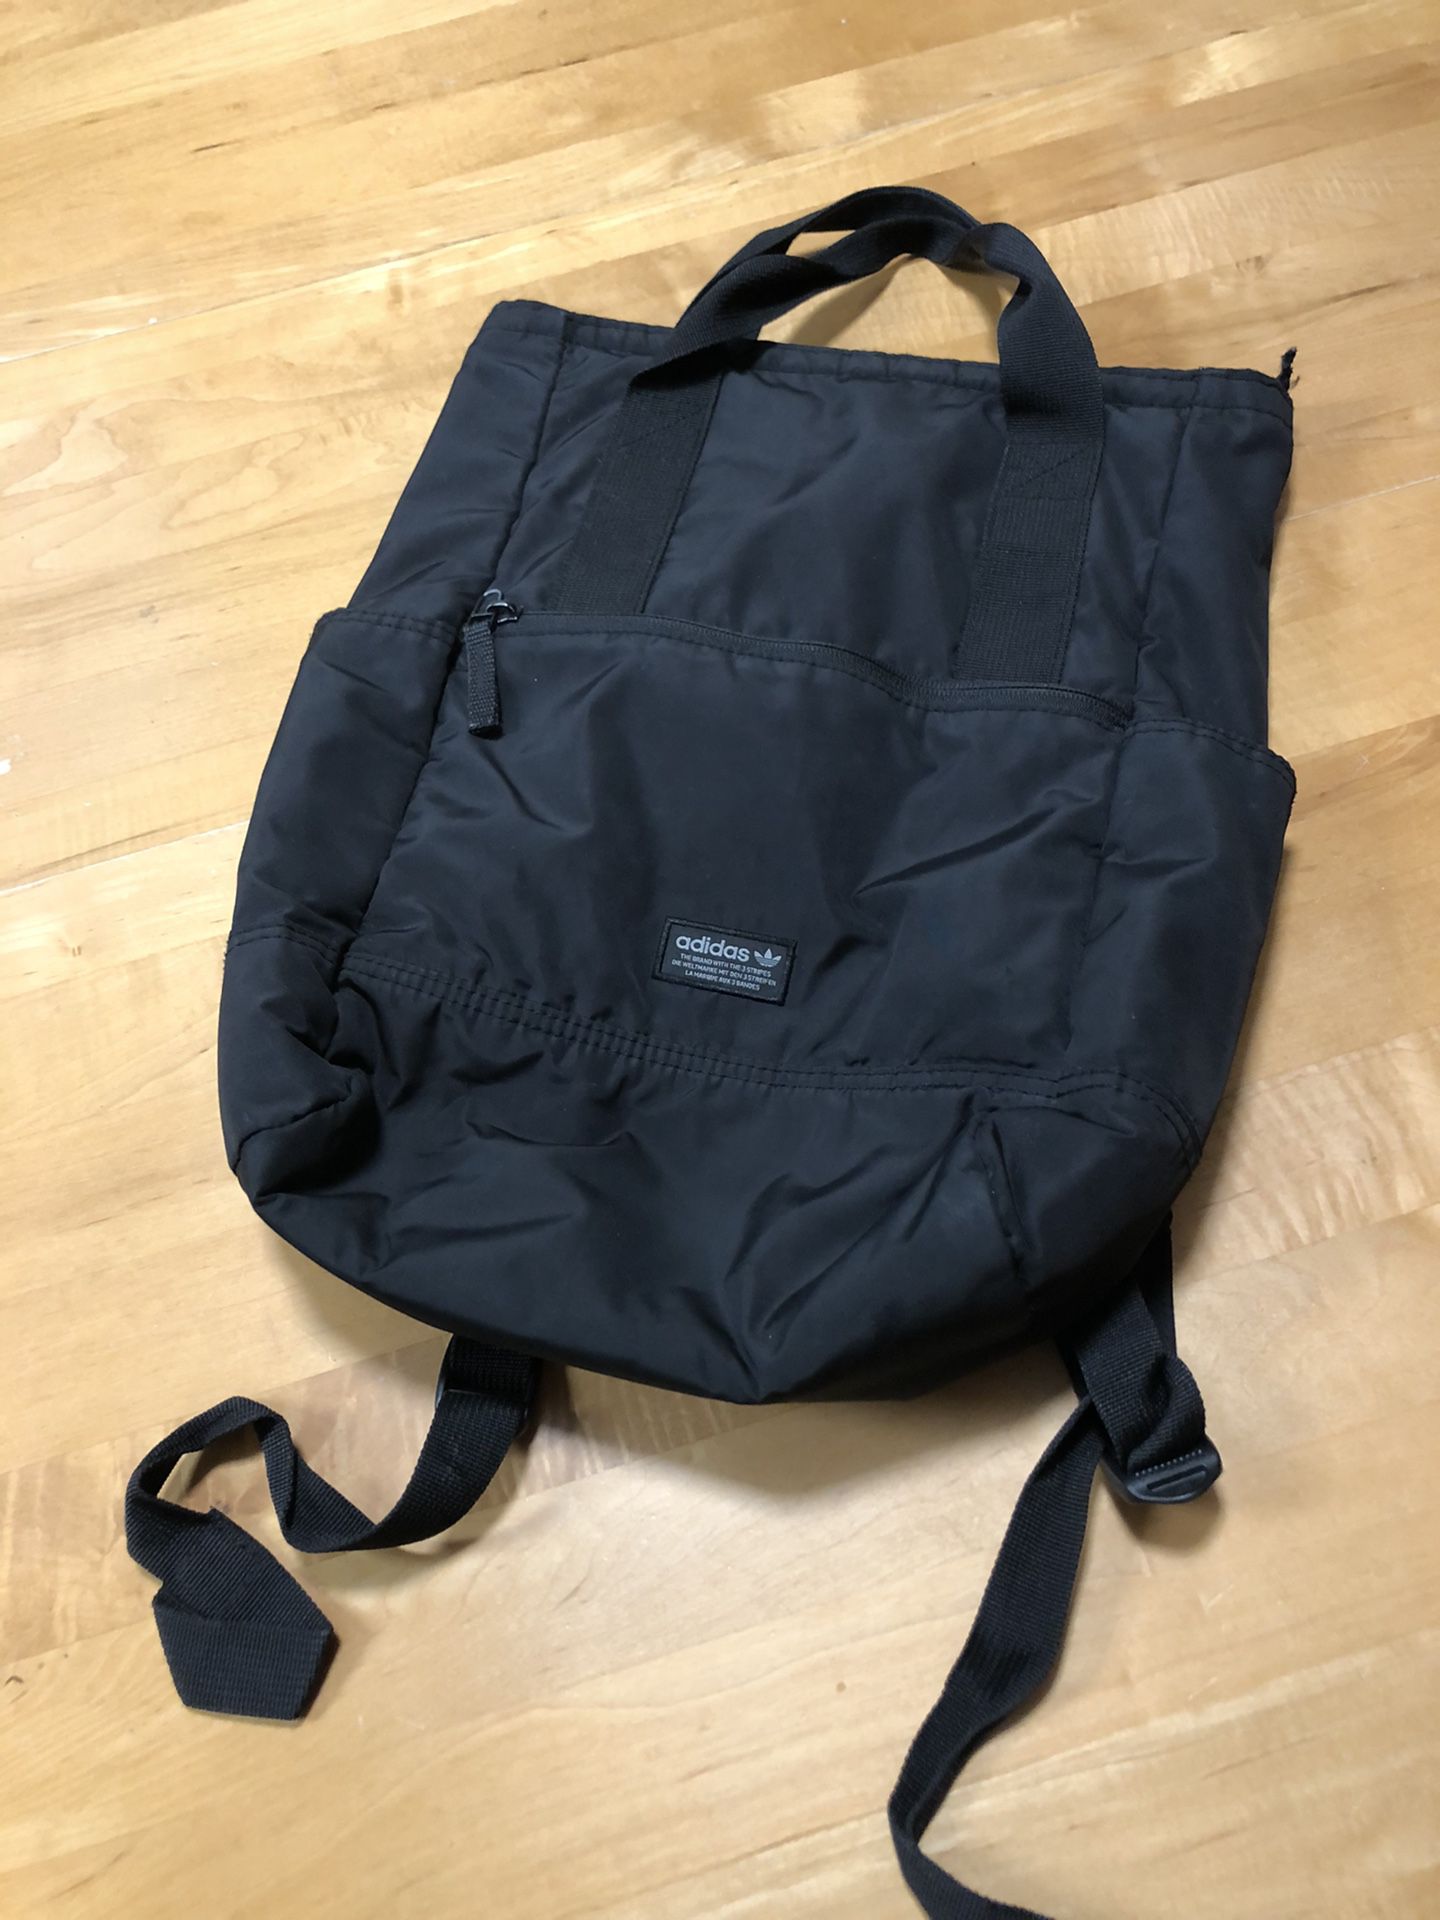 Adidas Backpack in black